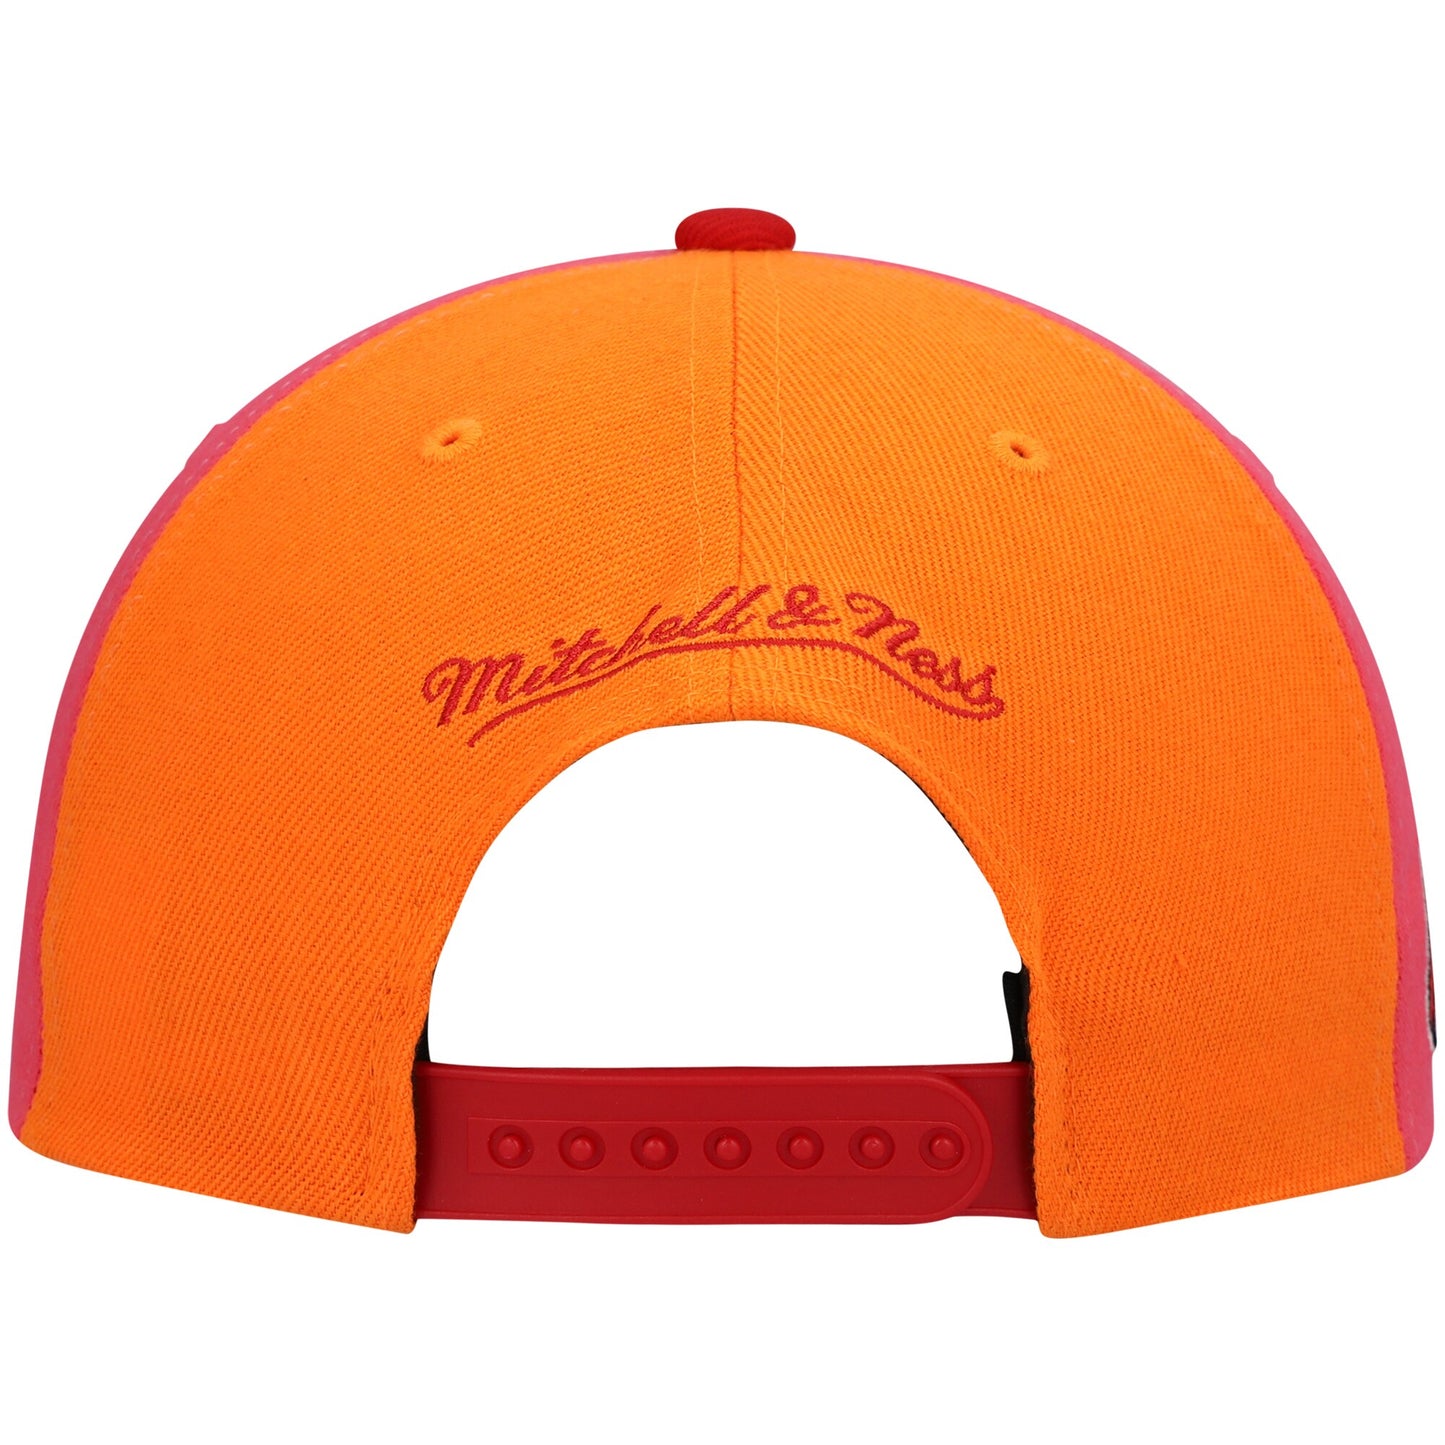 Miami Heat Mitchell & Ness Hardwood Classics On The Block Snapback Hat - Orange/Red